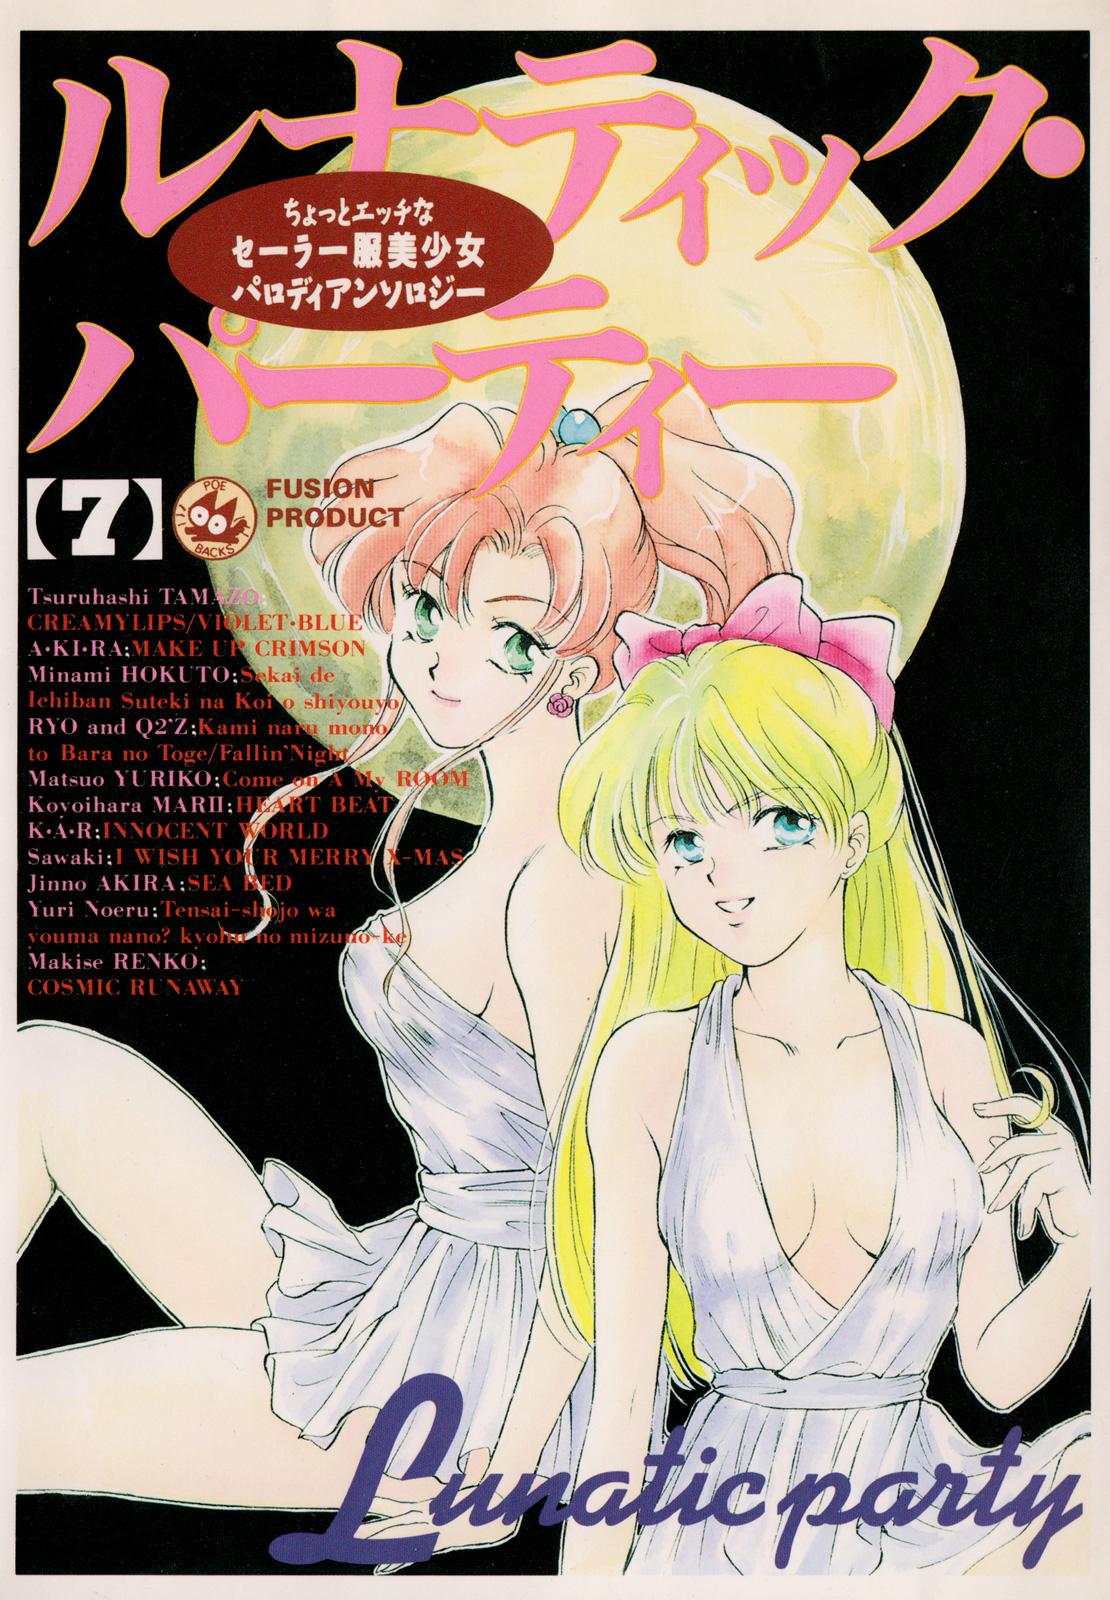 Realsex Lunatic Party 7 - Sailor moon Celebrity Nudes - Page 1